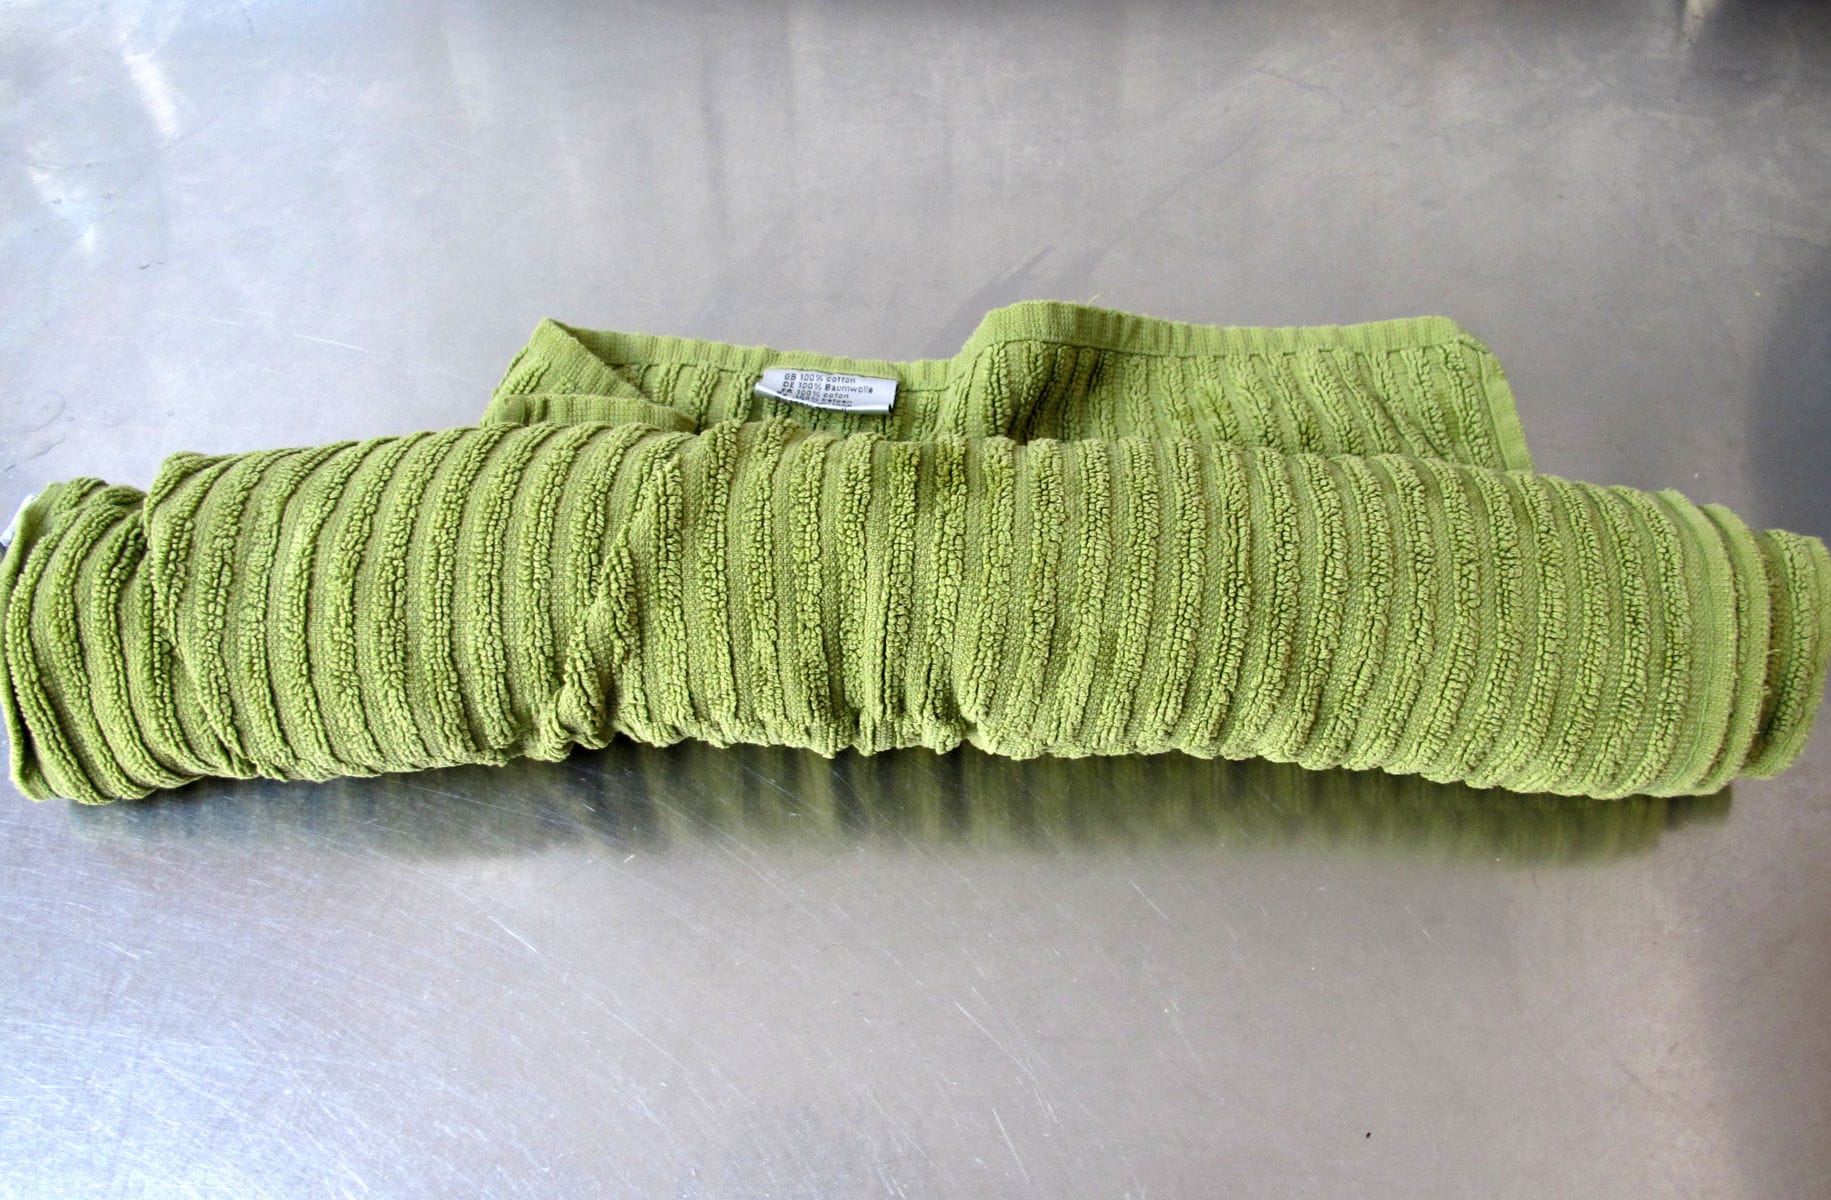 Image description: A rolled up light-green towel.